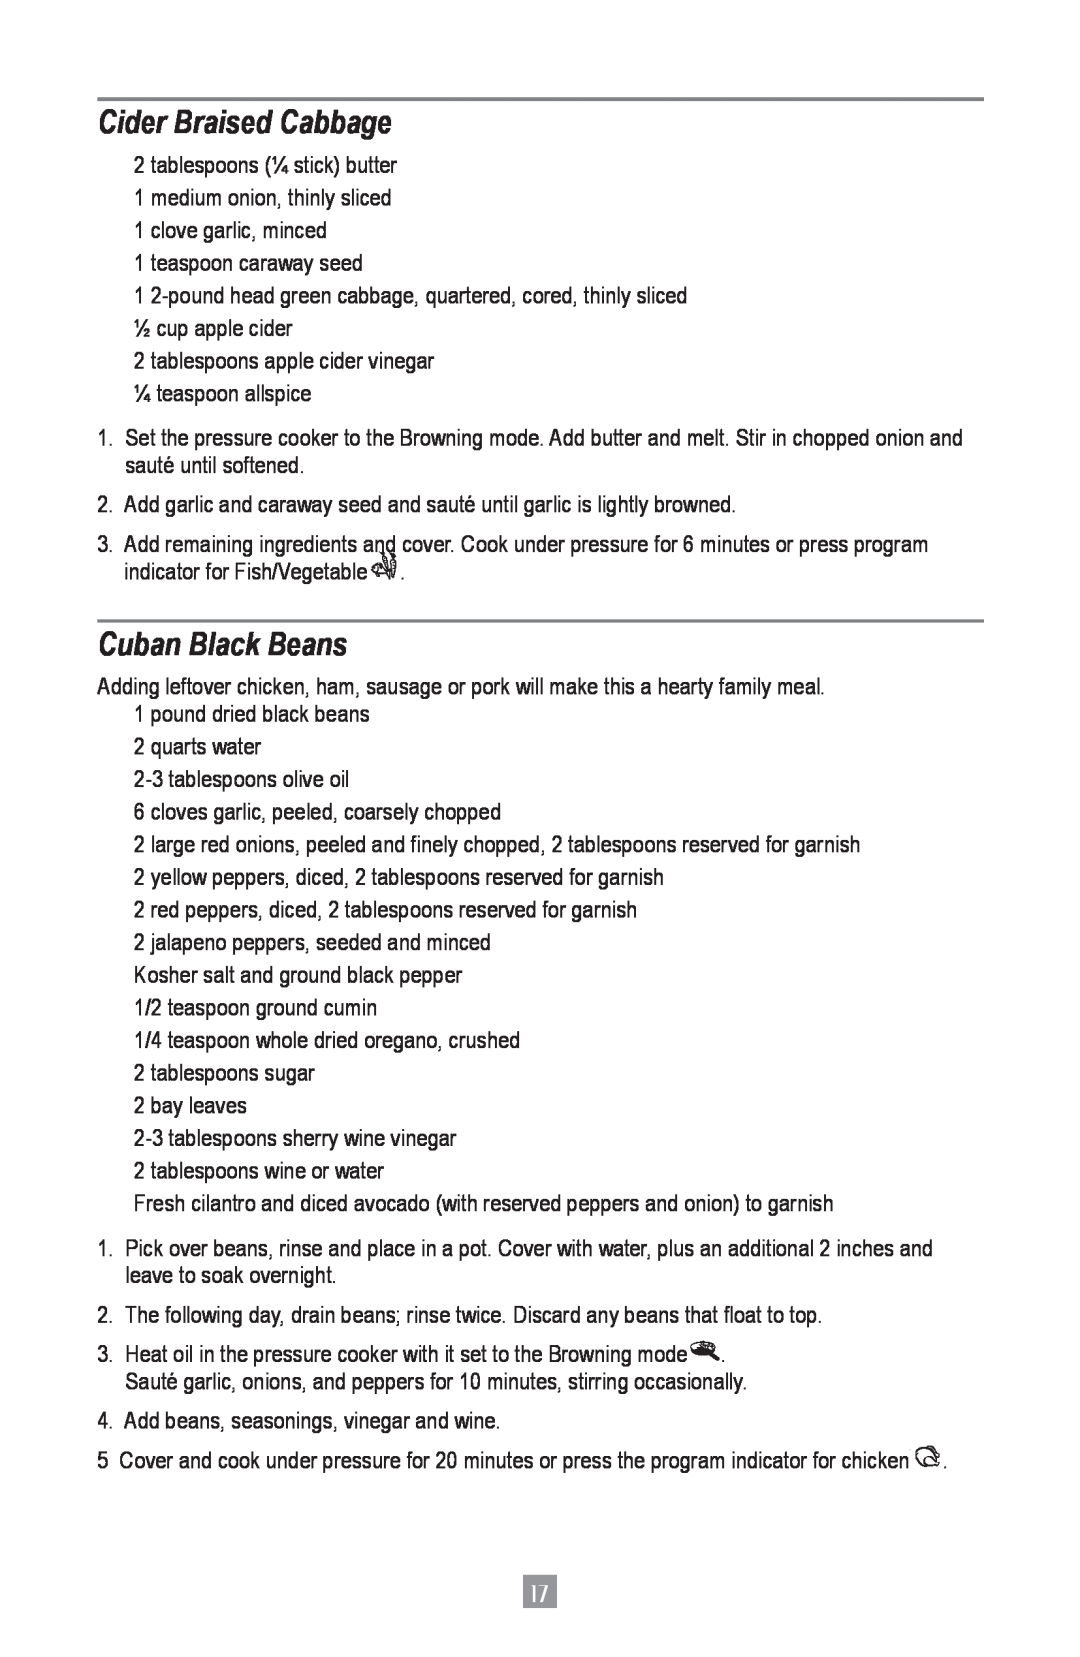 Oster 4801, Oster Digital Pressure Cooker instruction manual Cider Braised Cabbage, Cuban Black Beans 